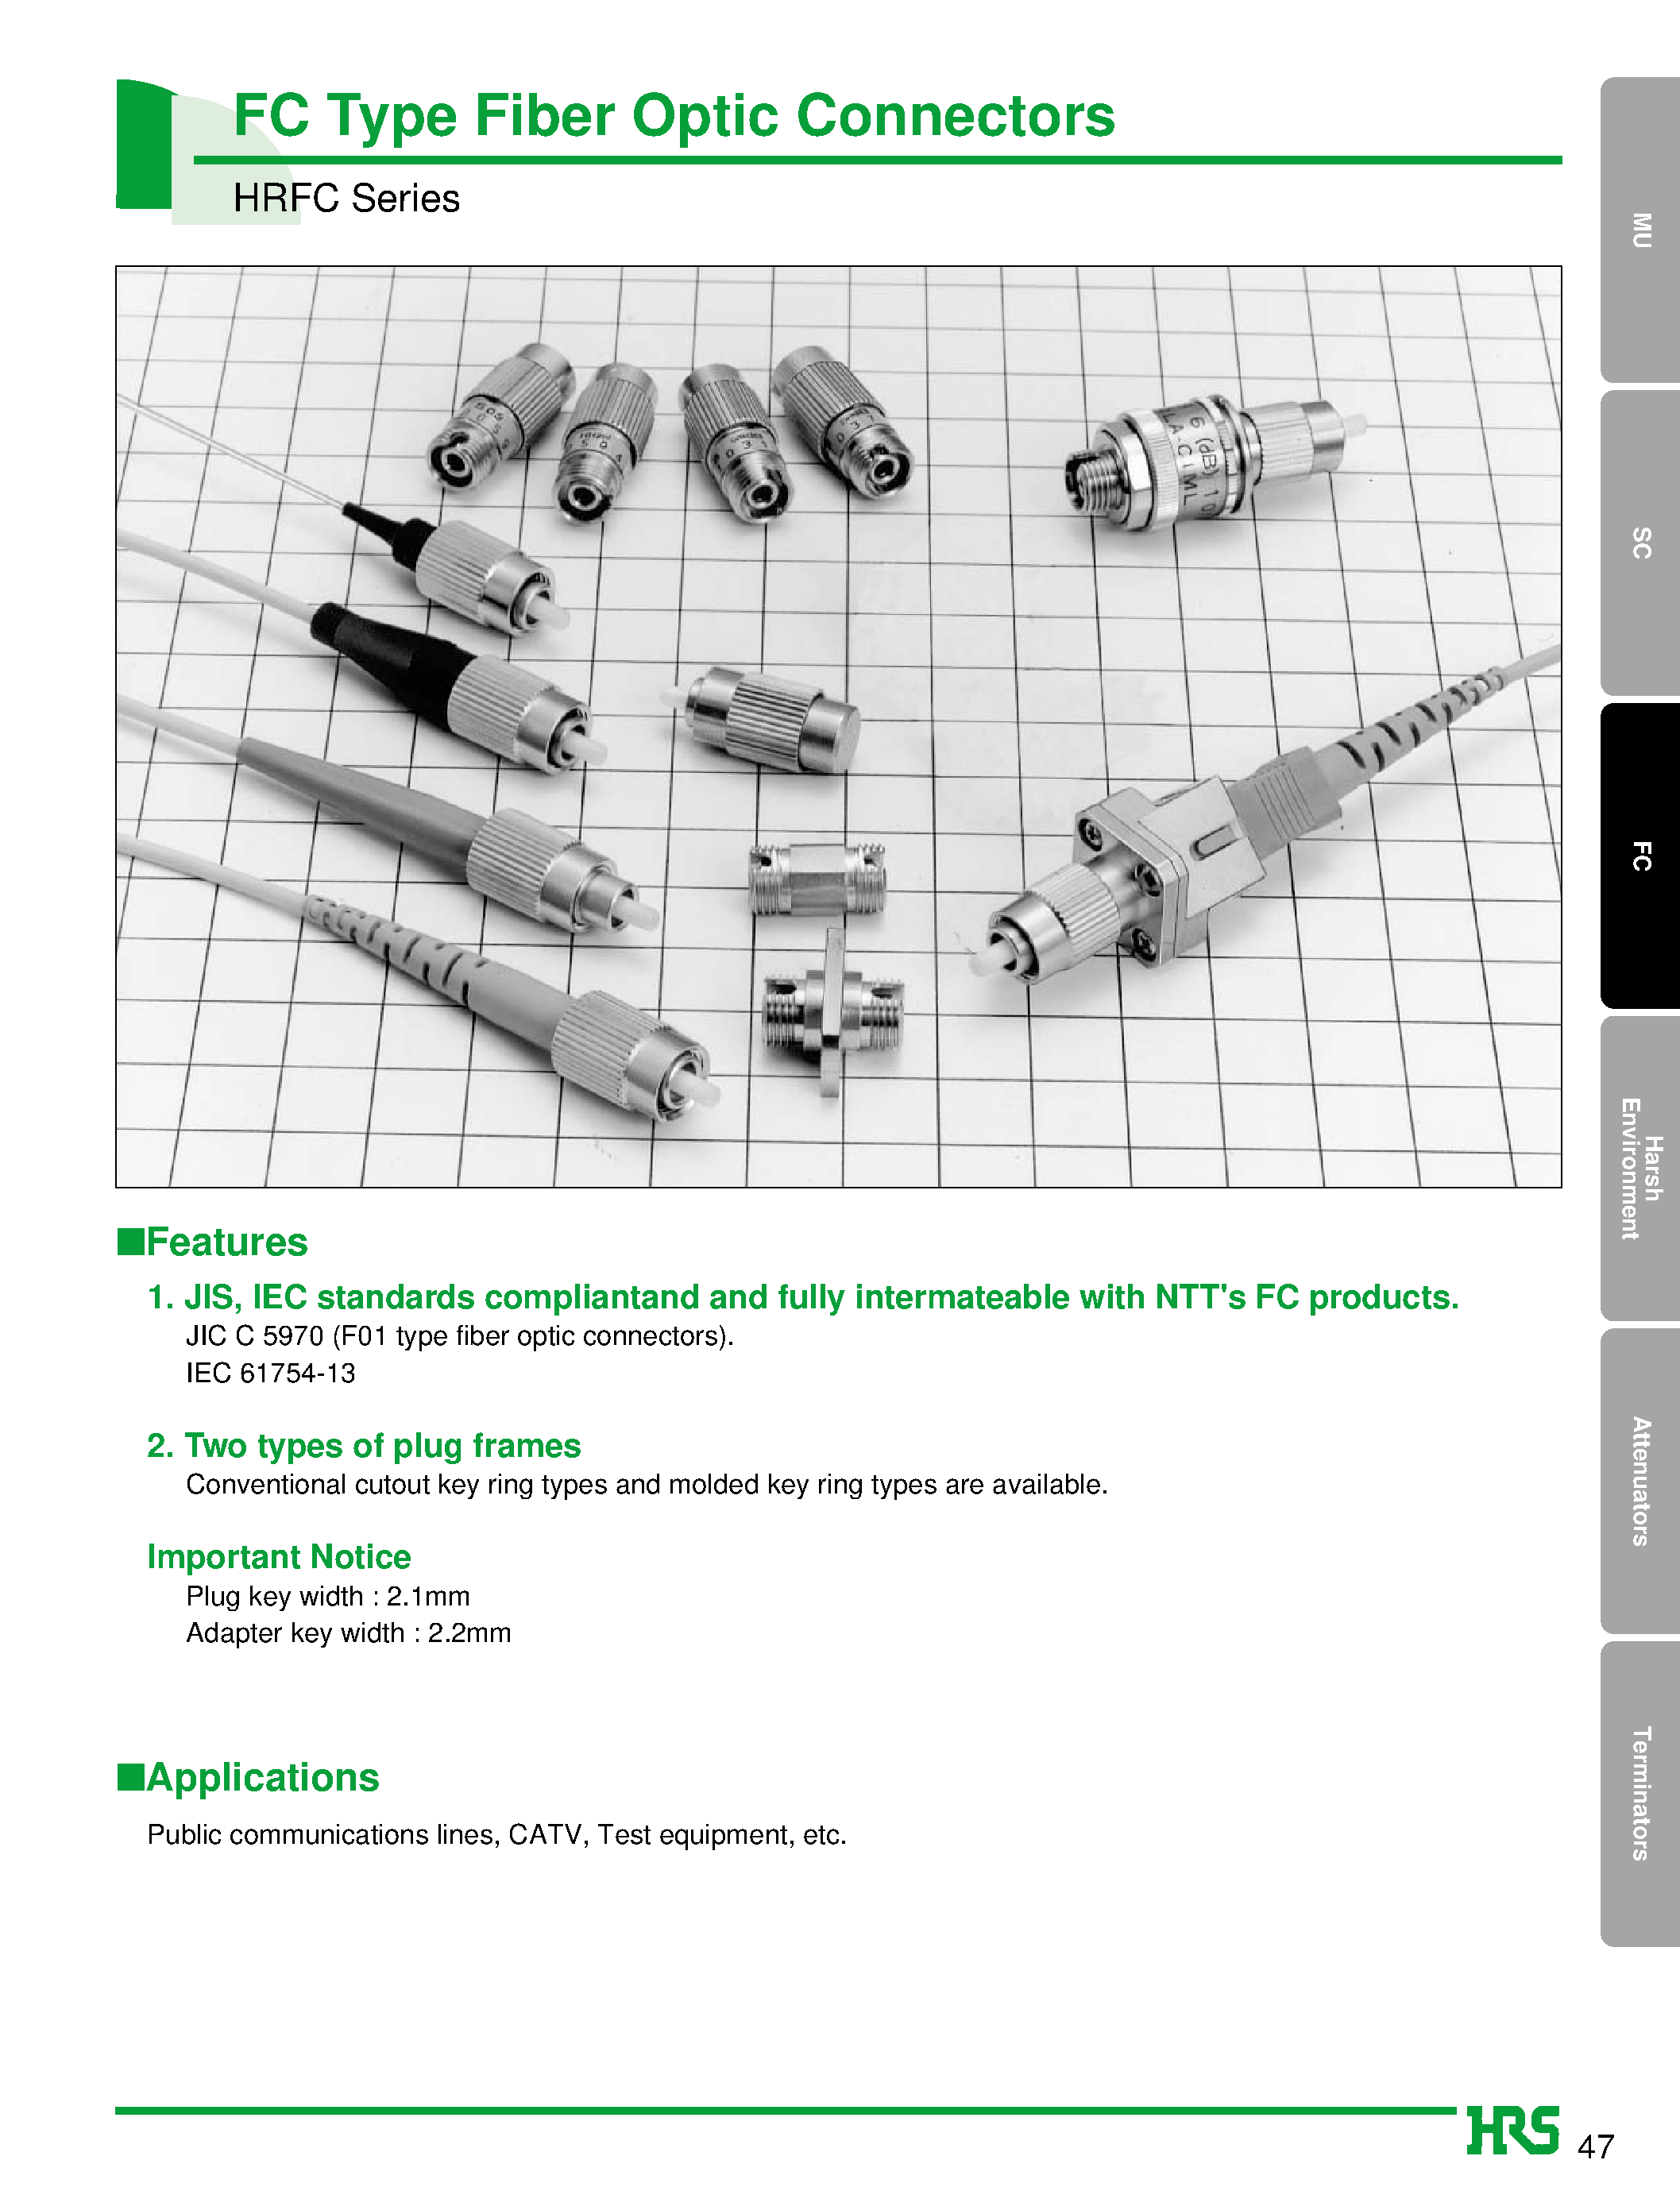 Datasheet HRFC-P15-H(21) - FC Type Fiber Optic Connectors page 1